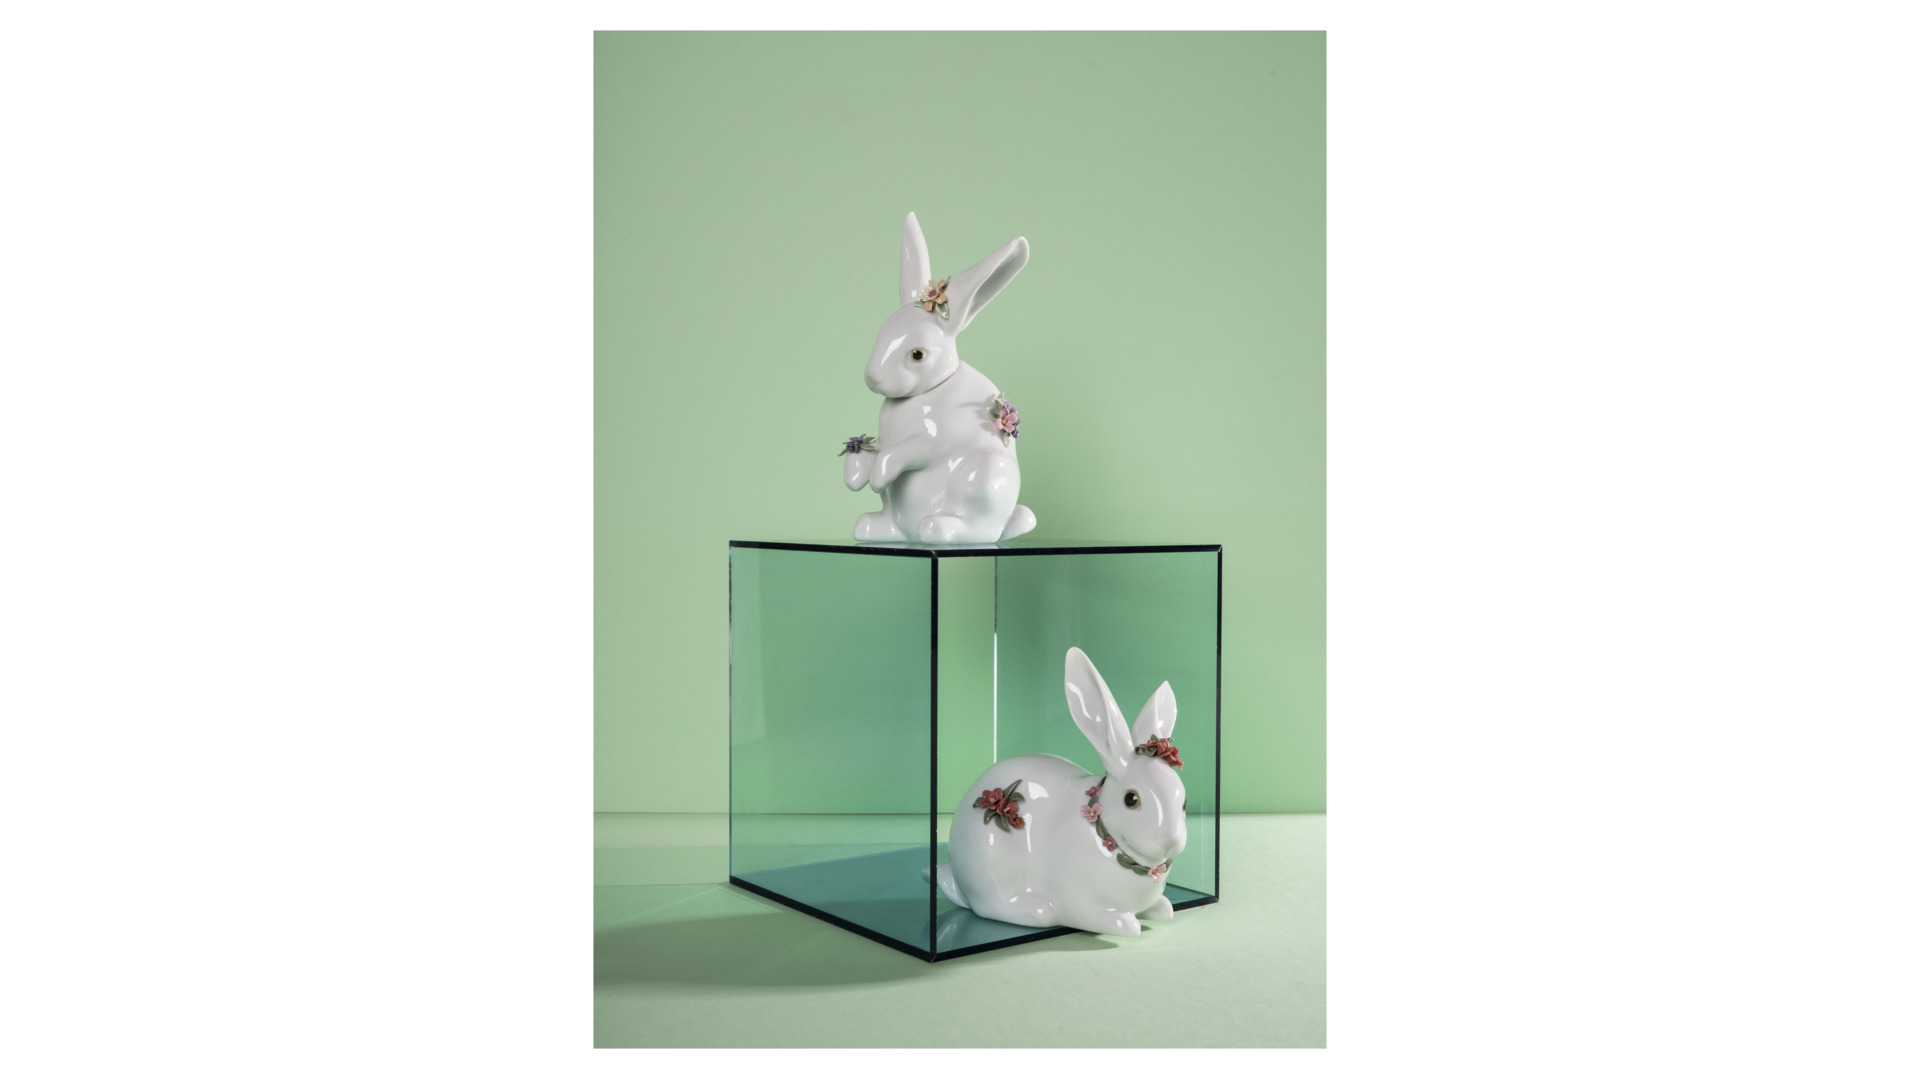 Фигурка Lladro Сидящий кролик 9x14 см, фарфор